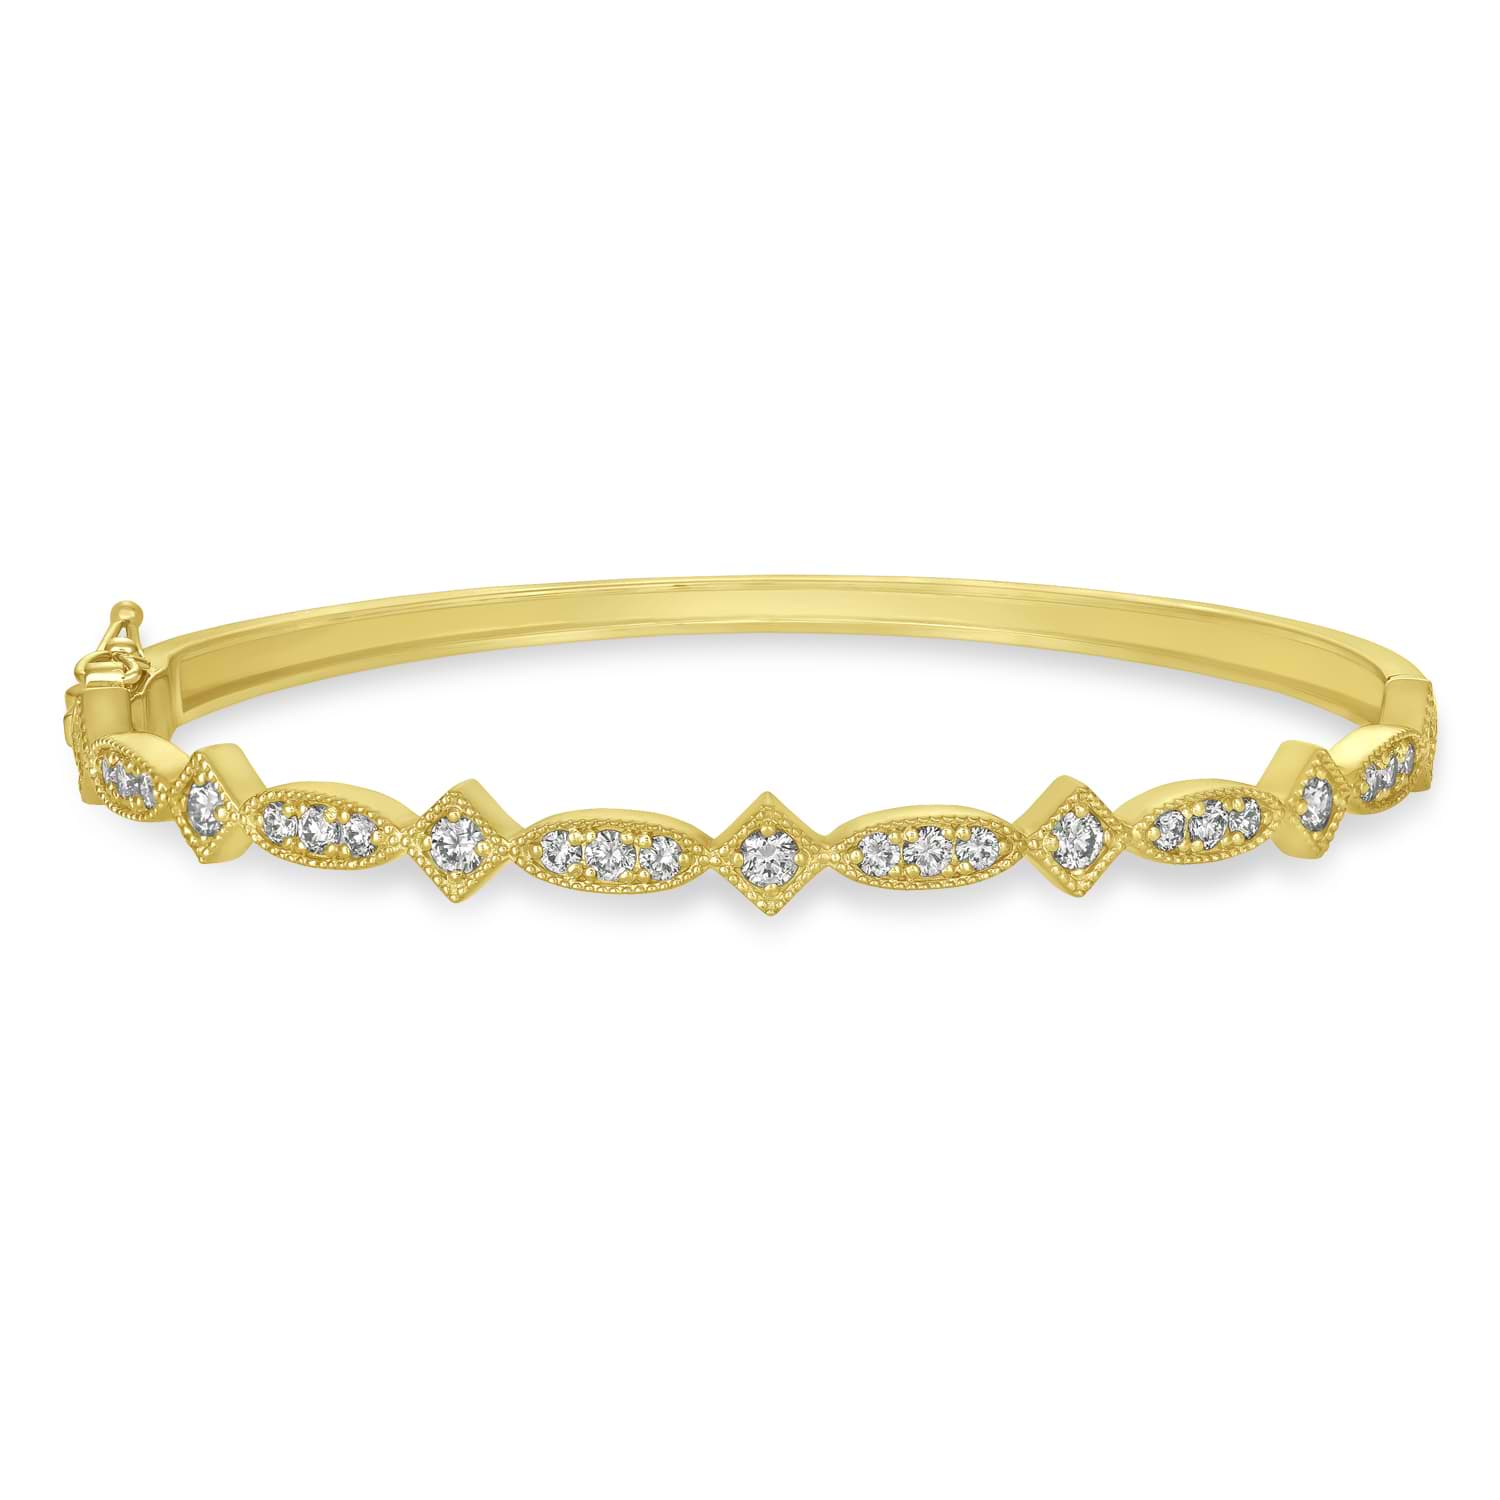 Vintage Style Diamond Bangle Bracelet in 14k Yellow Gold (1.18 ctw)